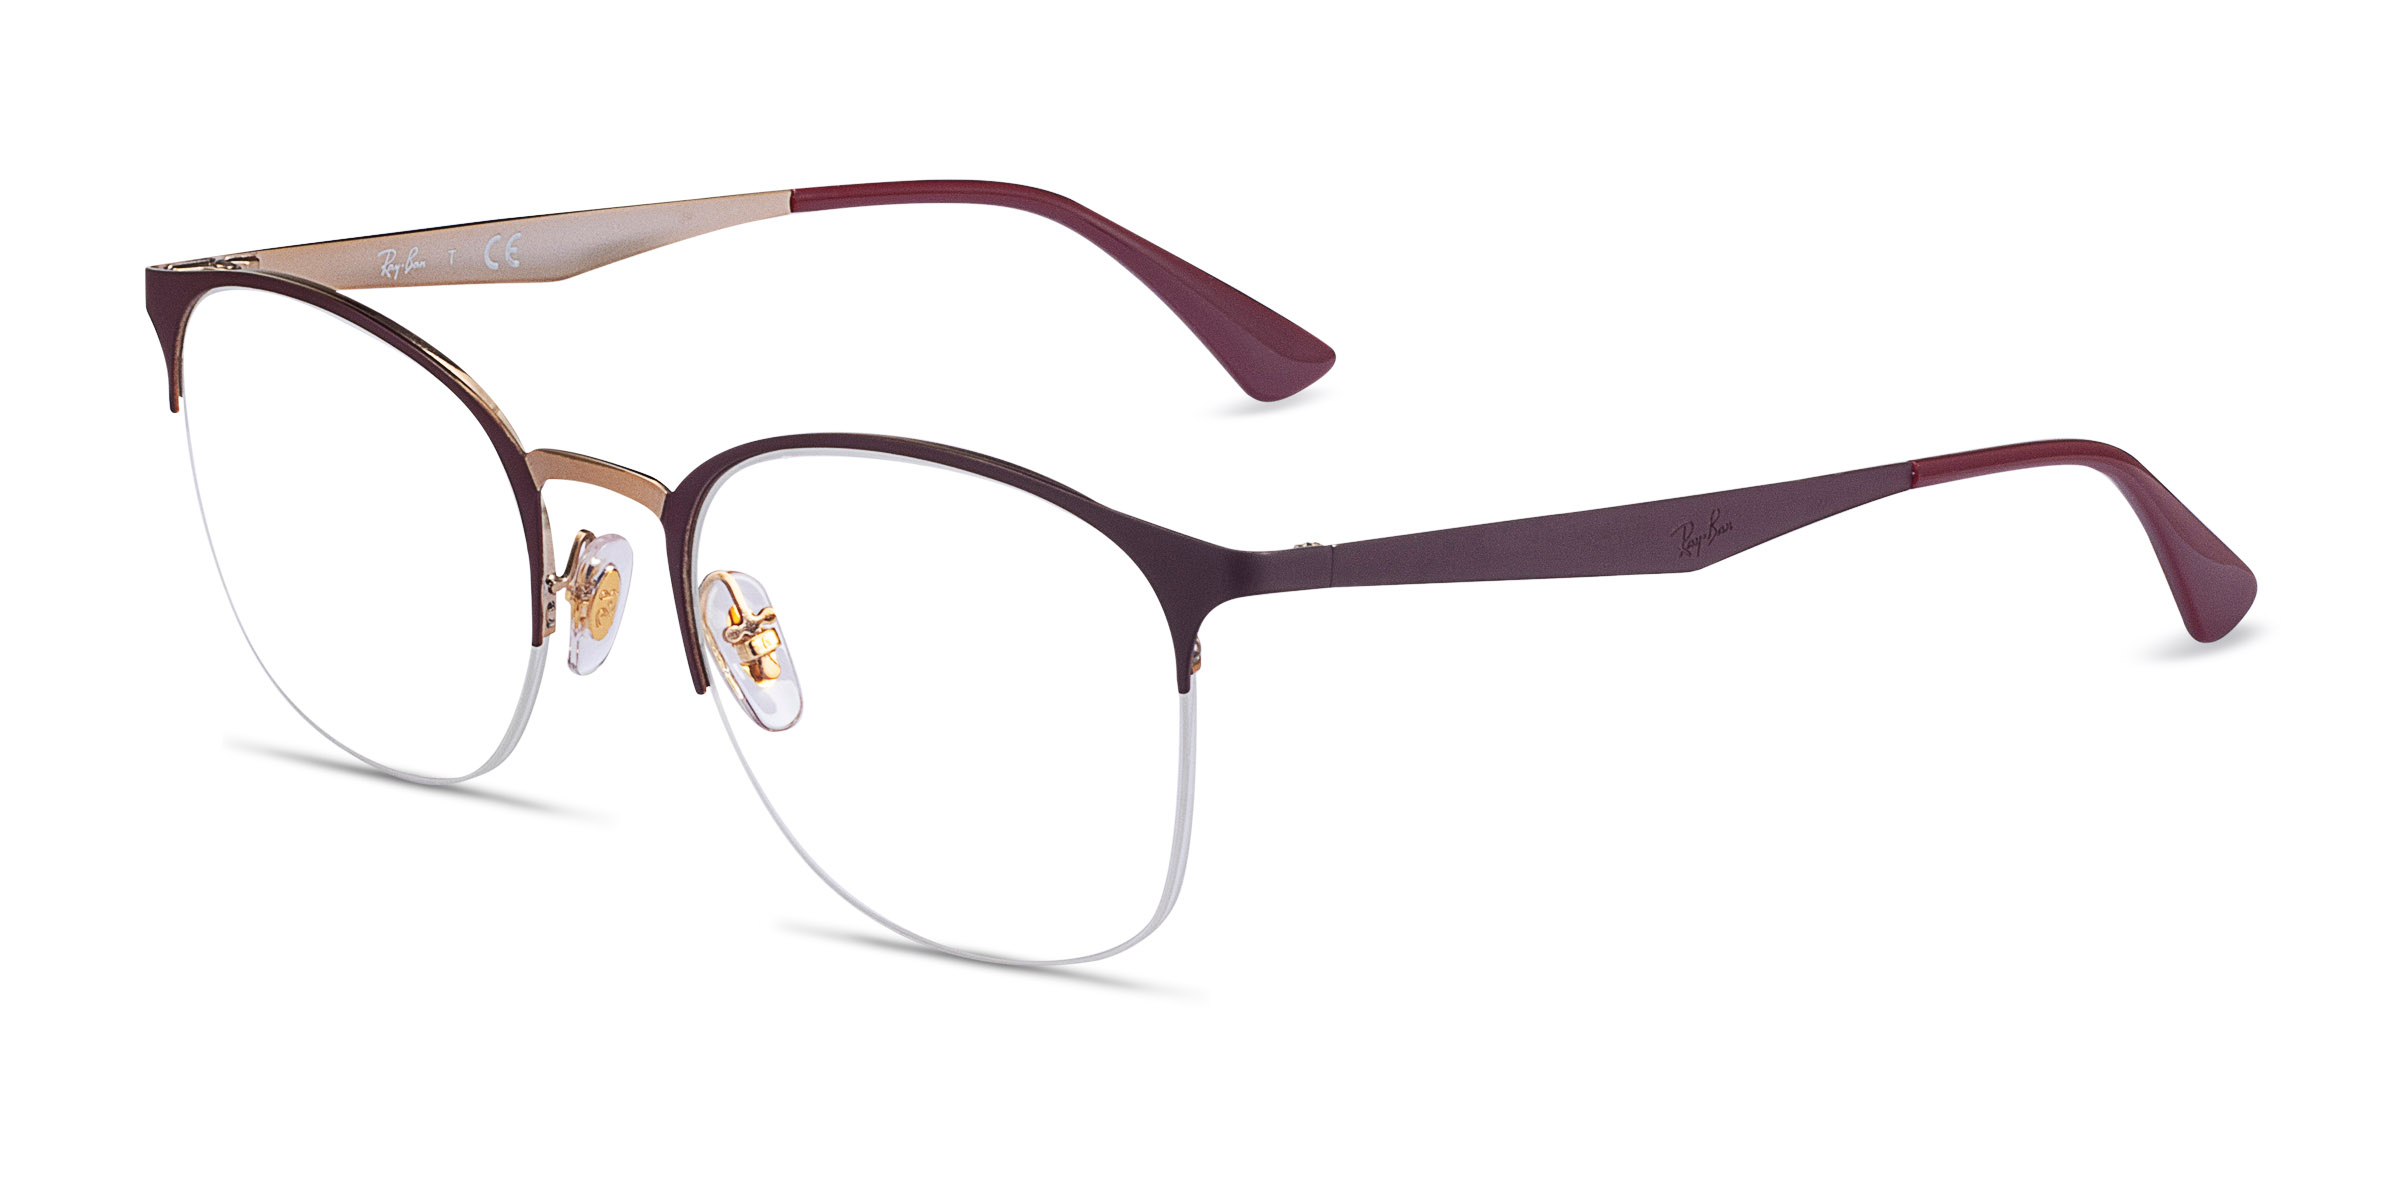 Ray-Ban RB6422 - Browline Bordeaux Gold Frame Eyeglasses | Eyebuydirect